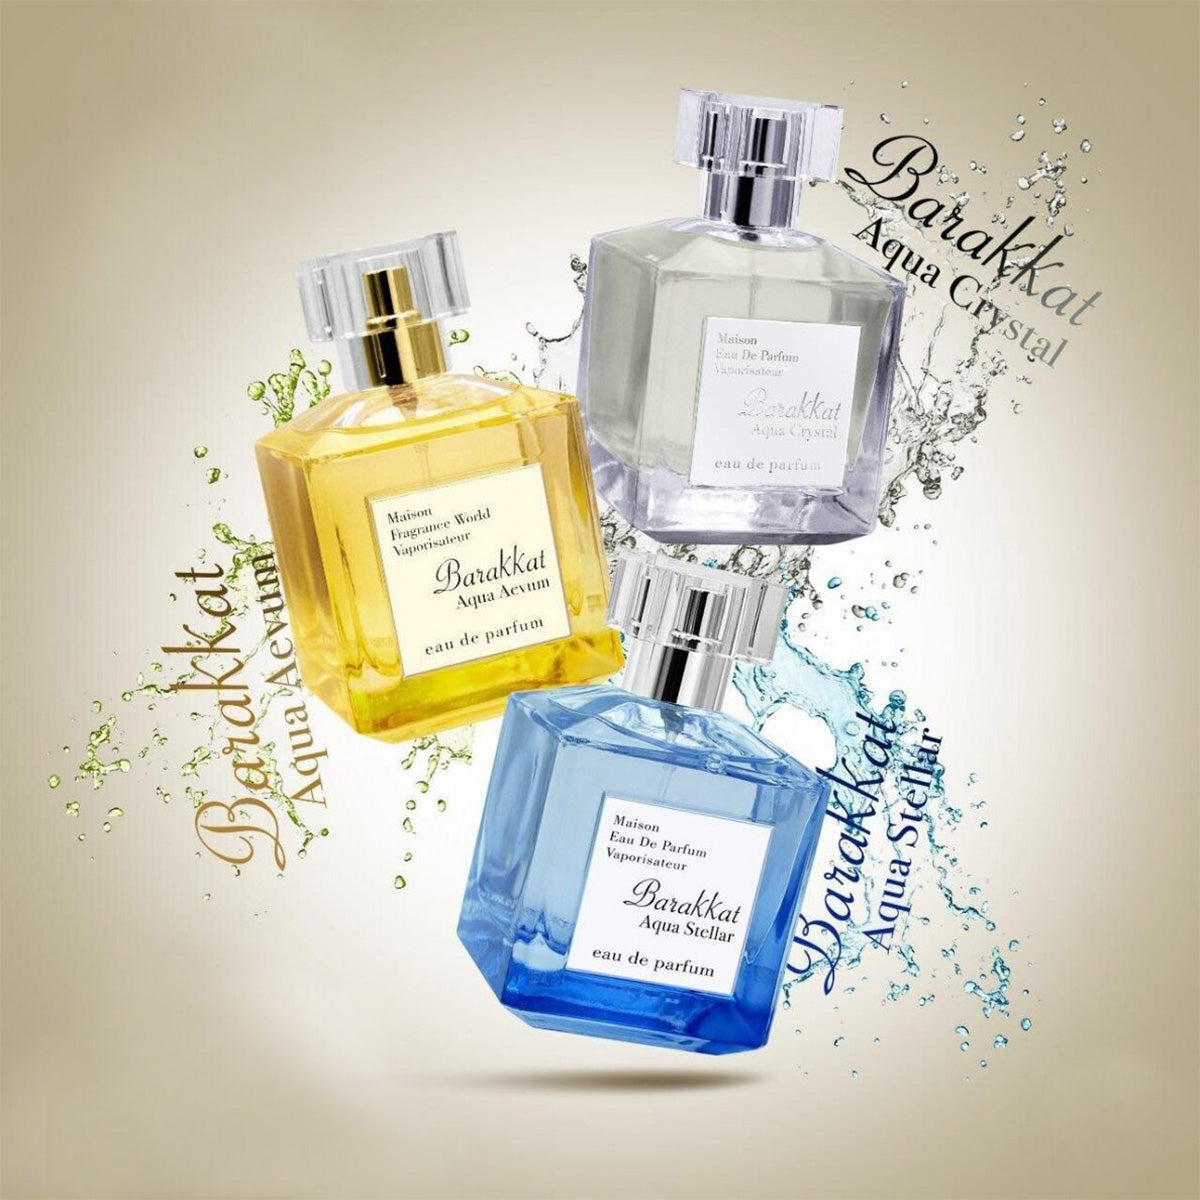 Barakkat Aqua Aevum Maison Eau de Parfum 100ml Fragrance World-Perfume Heaven